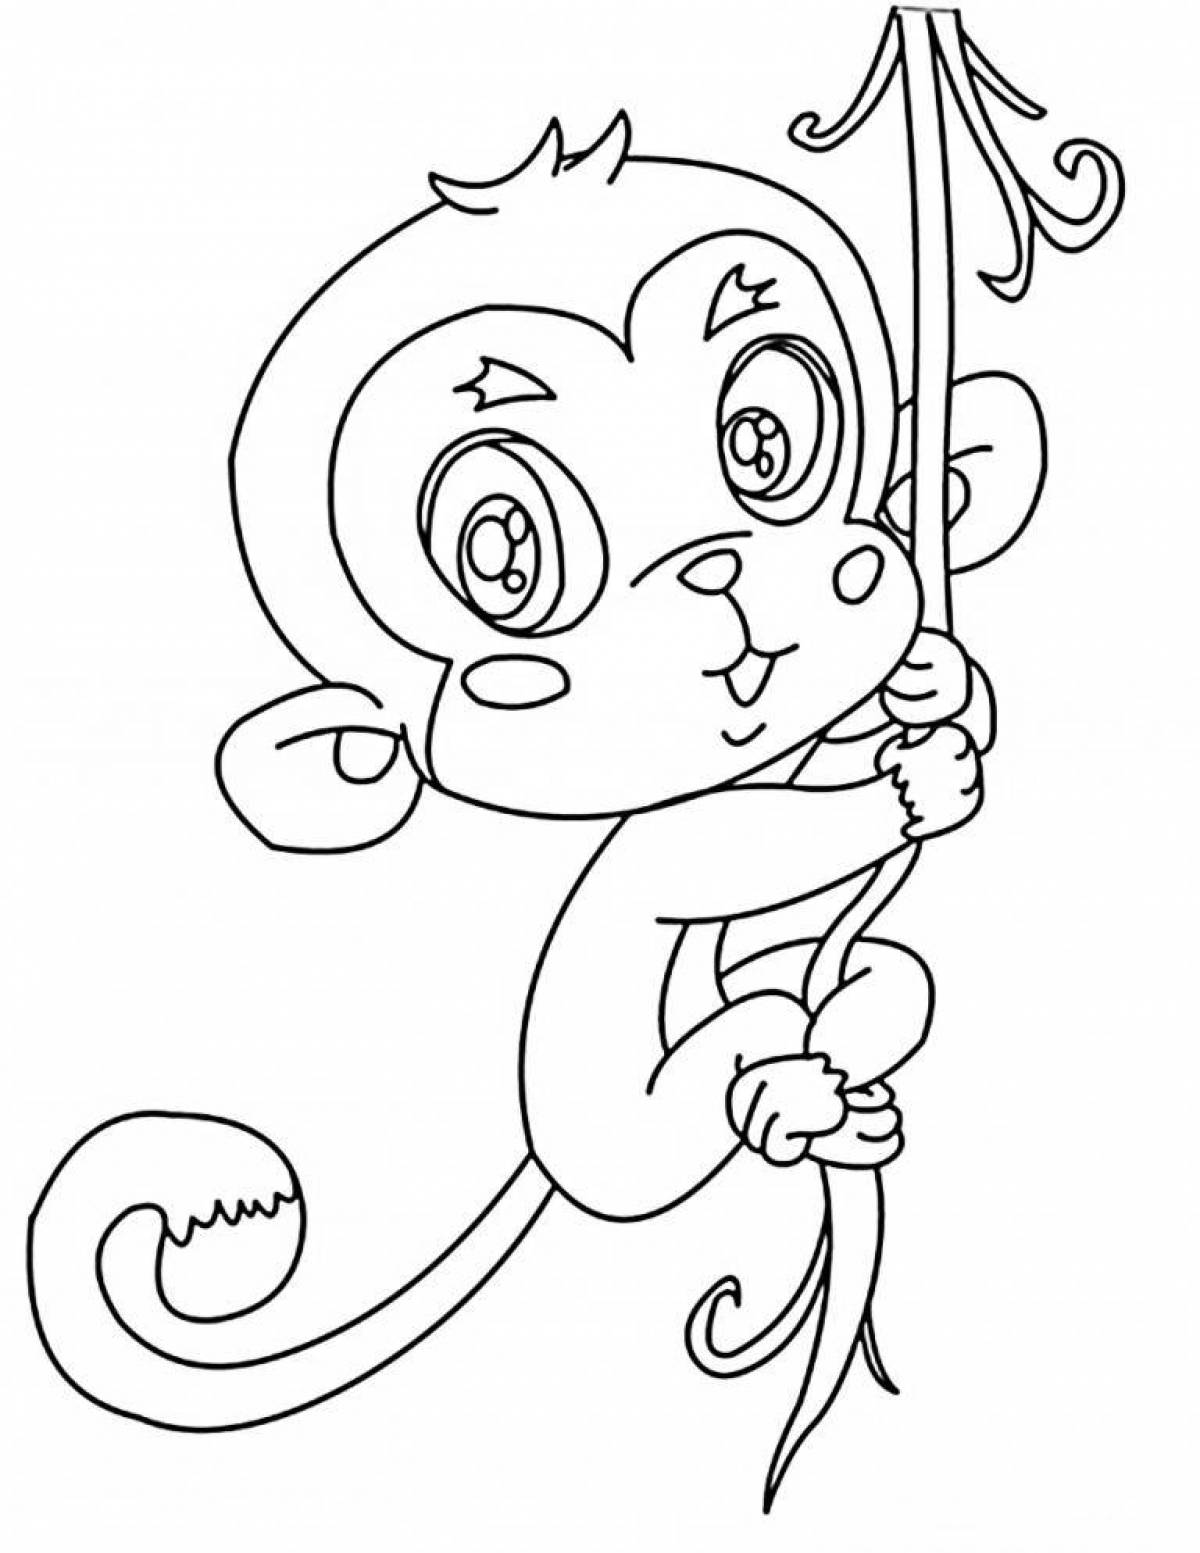 Буйная раскраска обезьяна для детей